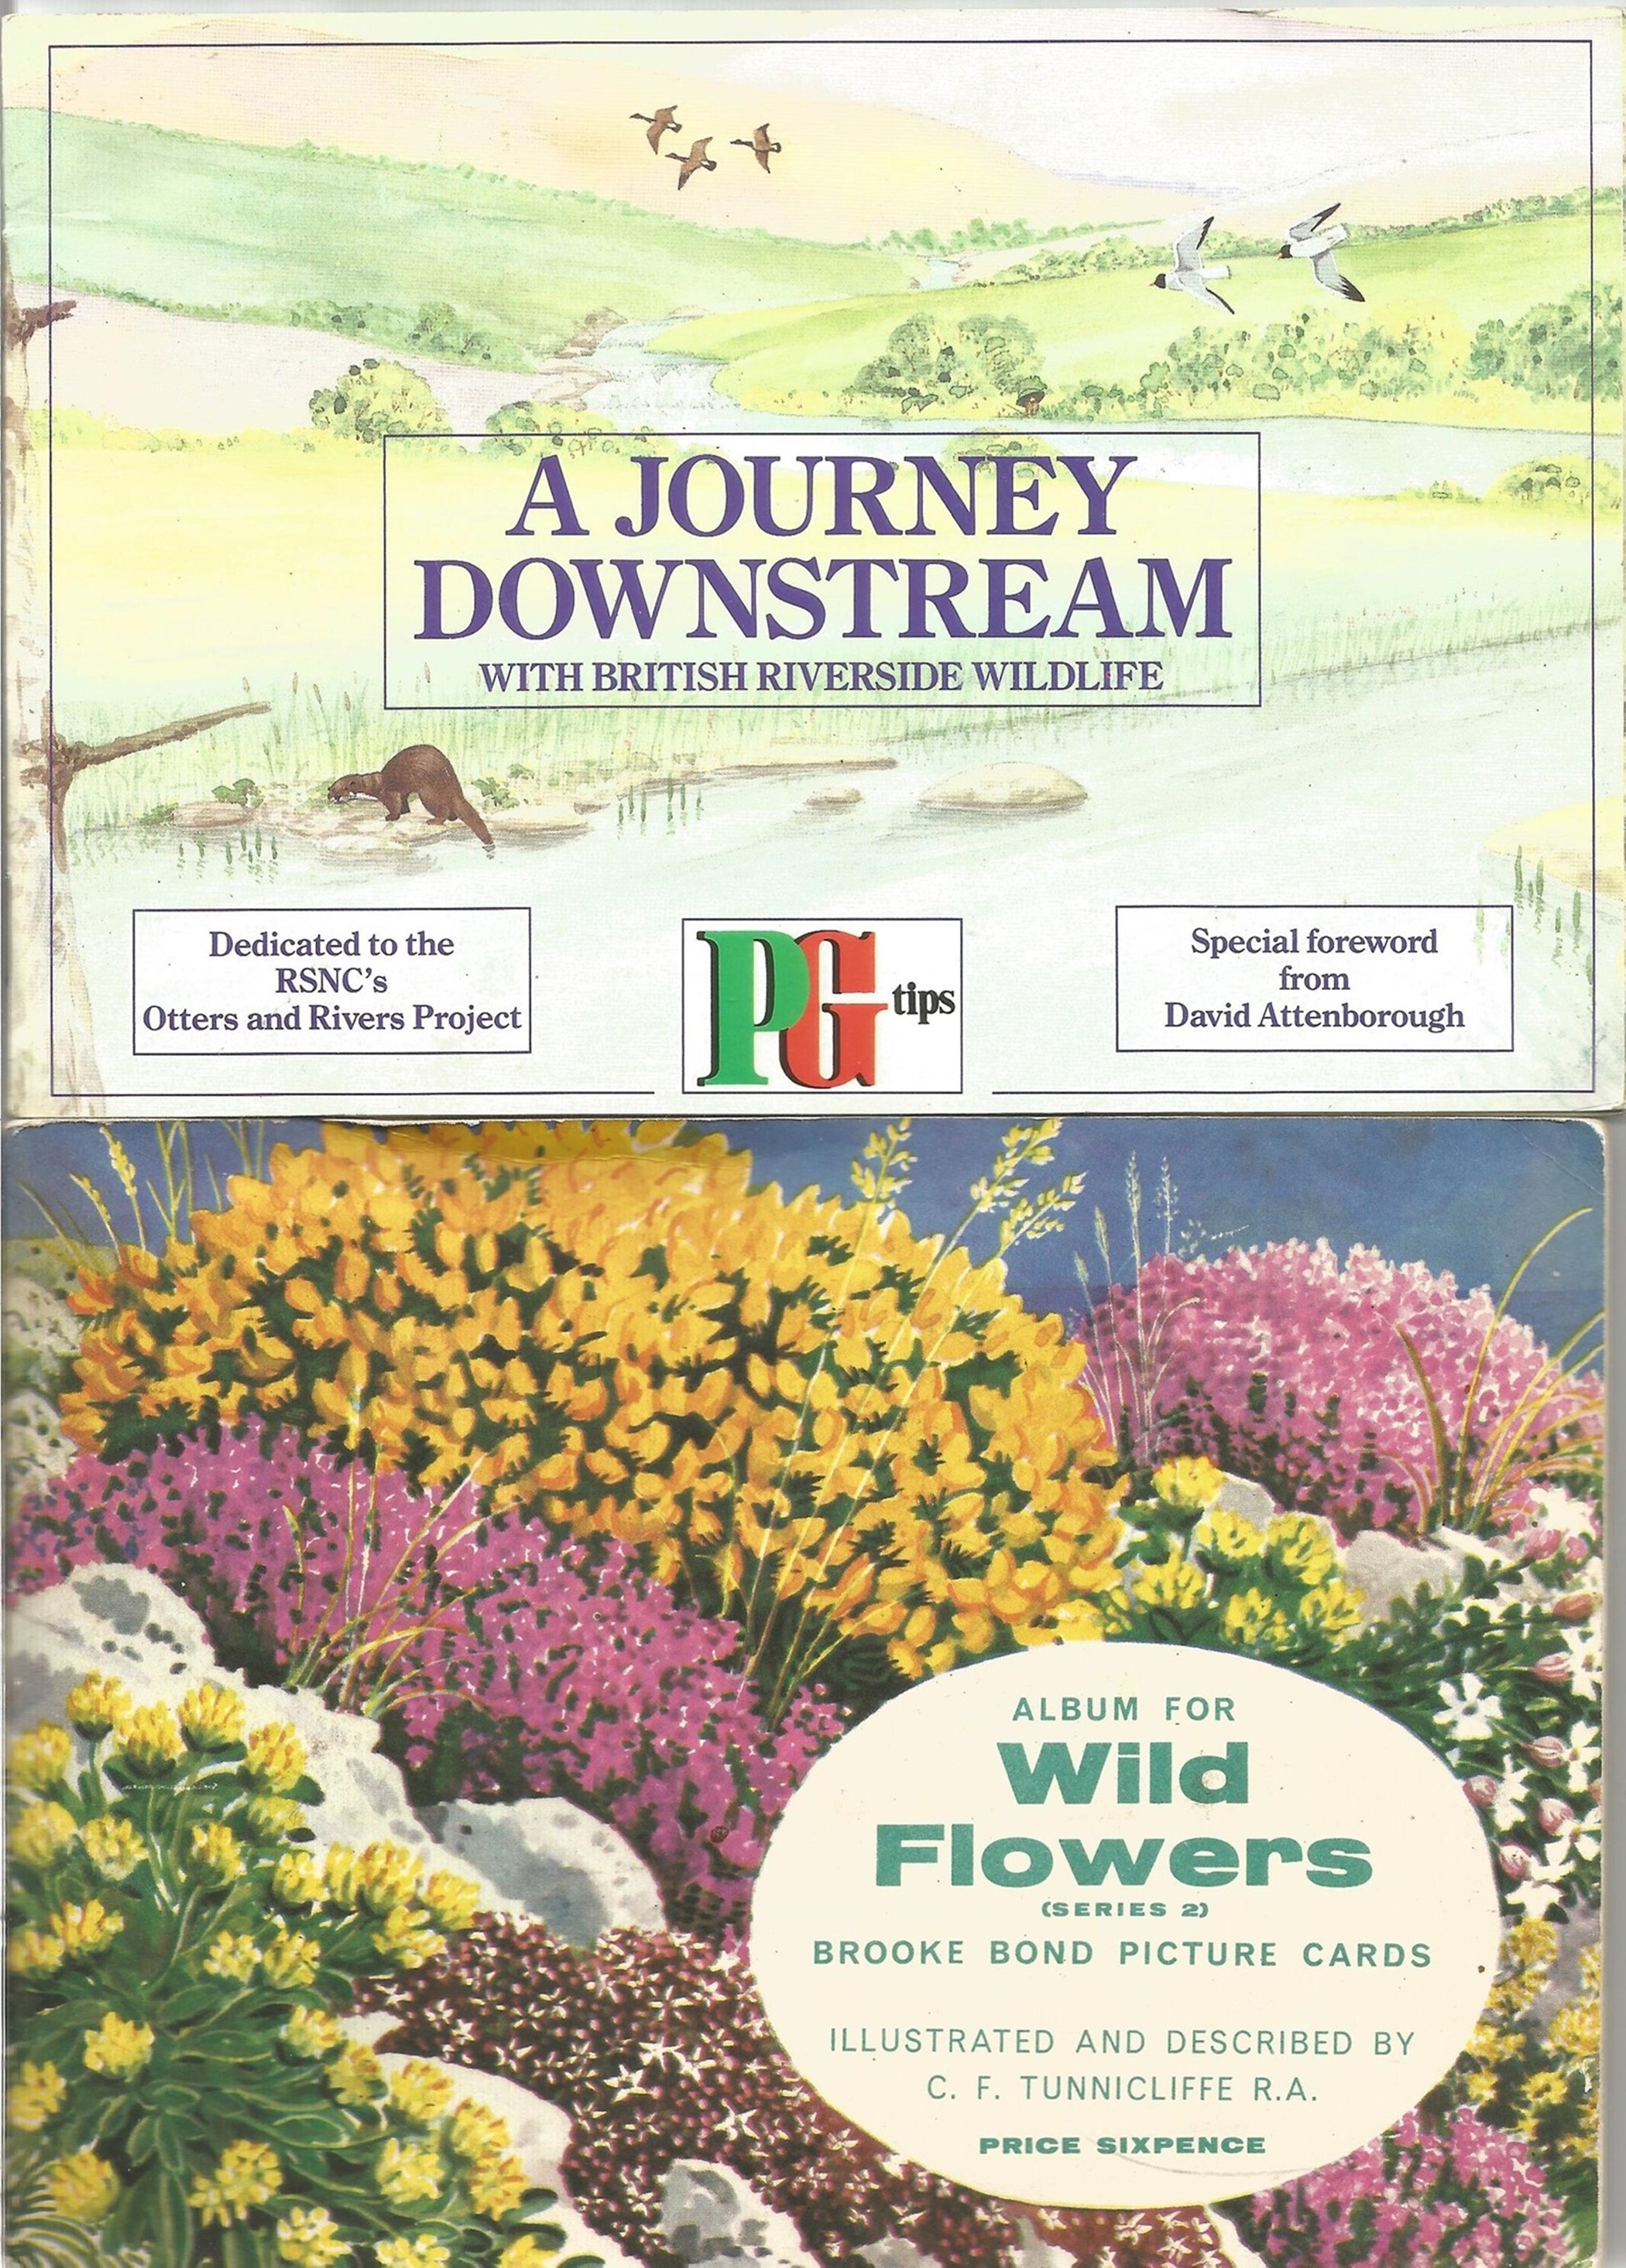 5 x Brooke Bond / Cigarette Picture Card Books, Part Sets, Including Wild Flowers (Part), - Image 2 of 3